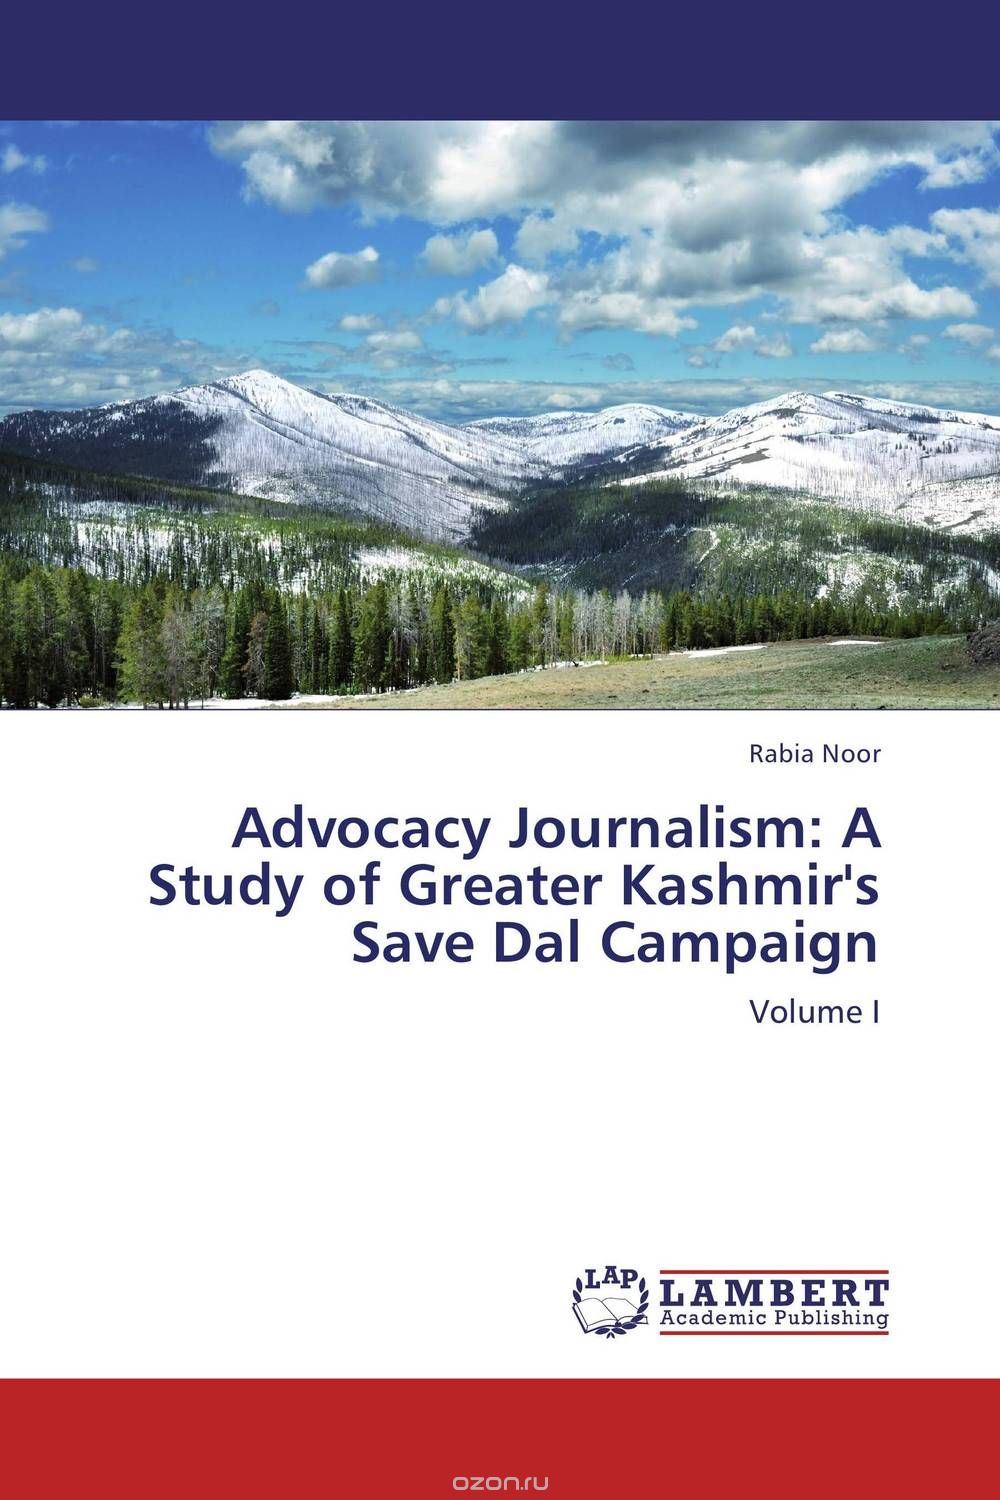 Скачать книгу "Advocacy Journalism: A Study of Greater Kashmir's Save Dal Campaign"